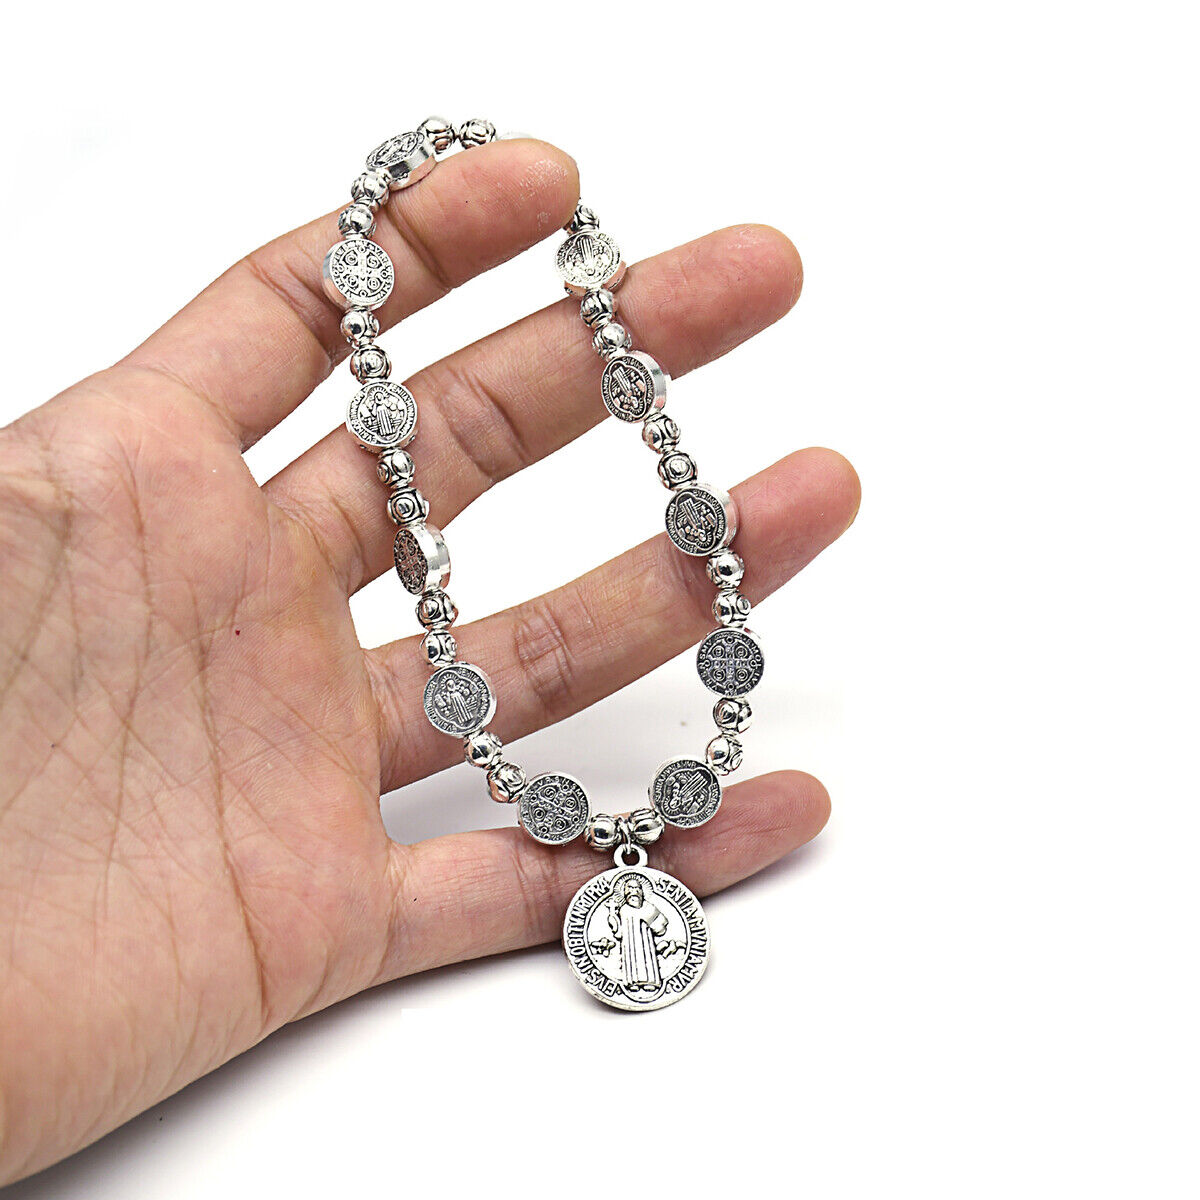 Saint St Benedict Medal Silver Rosary Bracelet Pulsera De Plata De San Benito